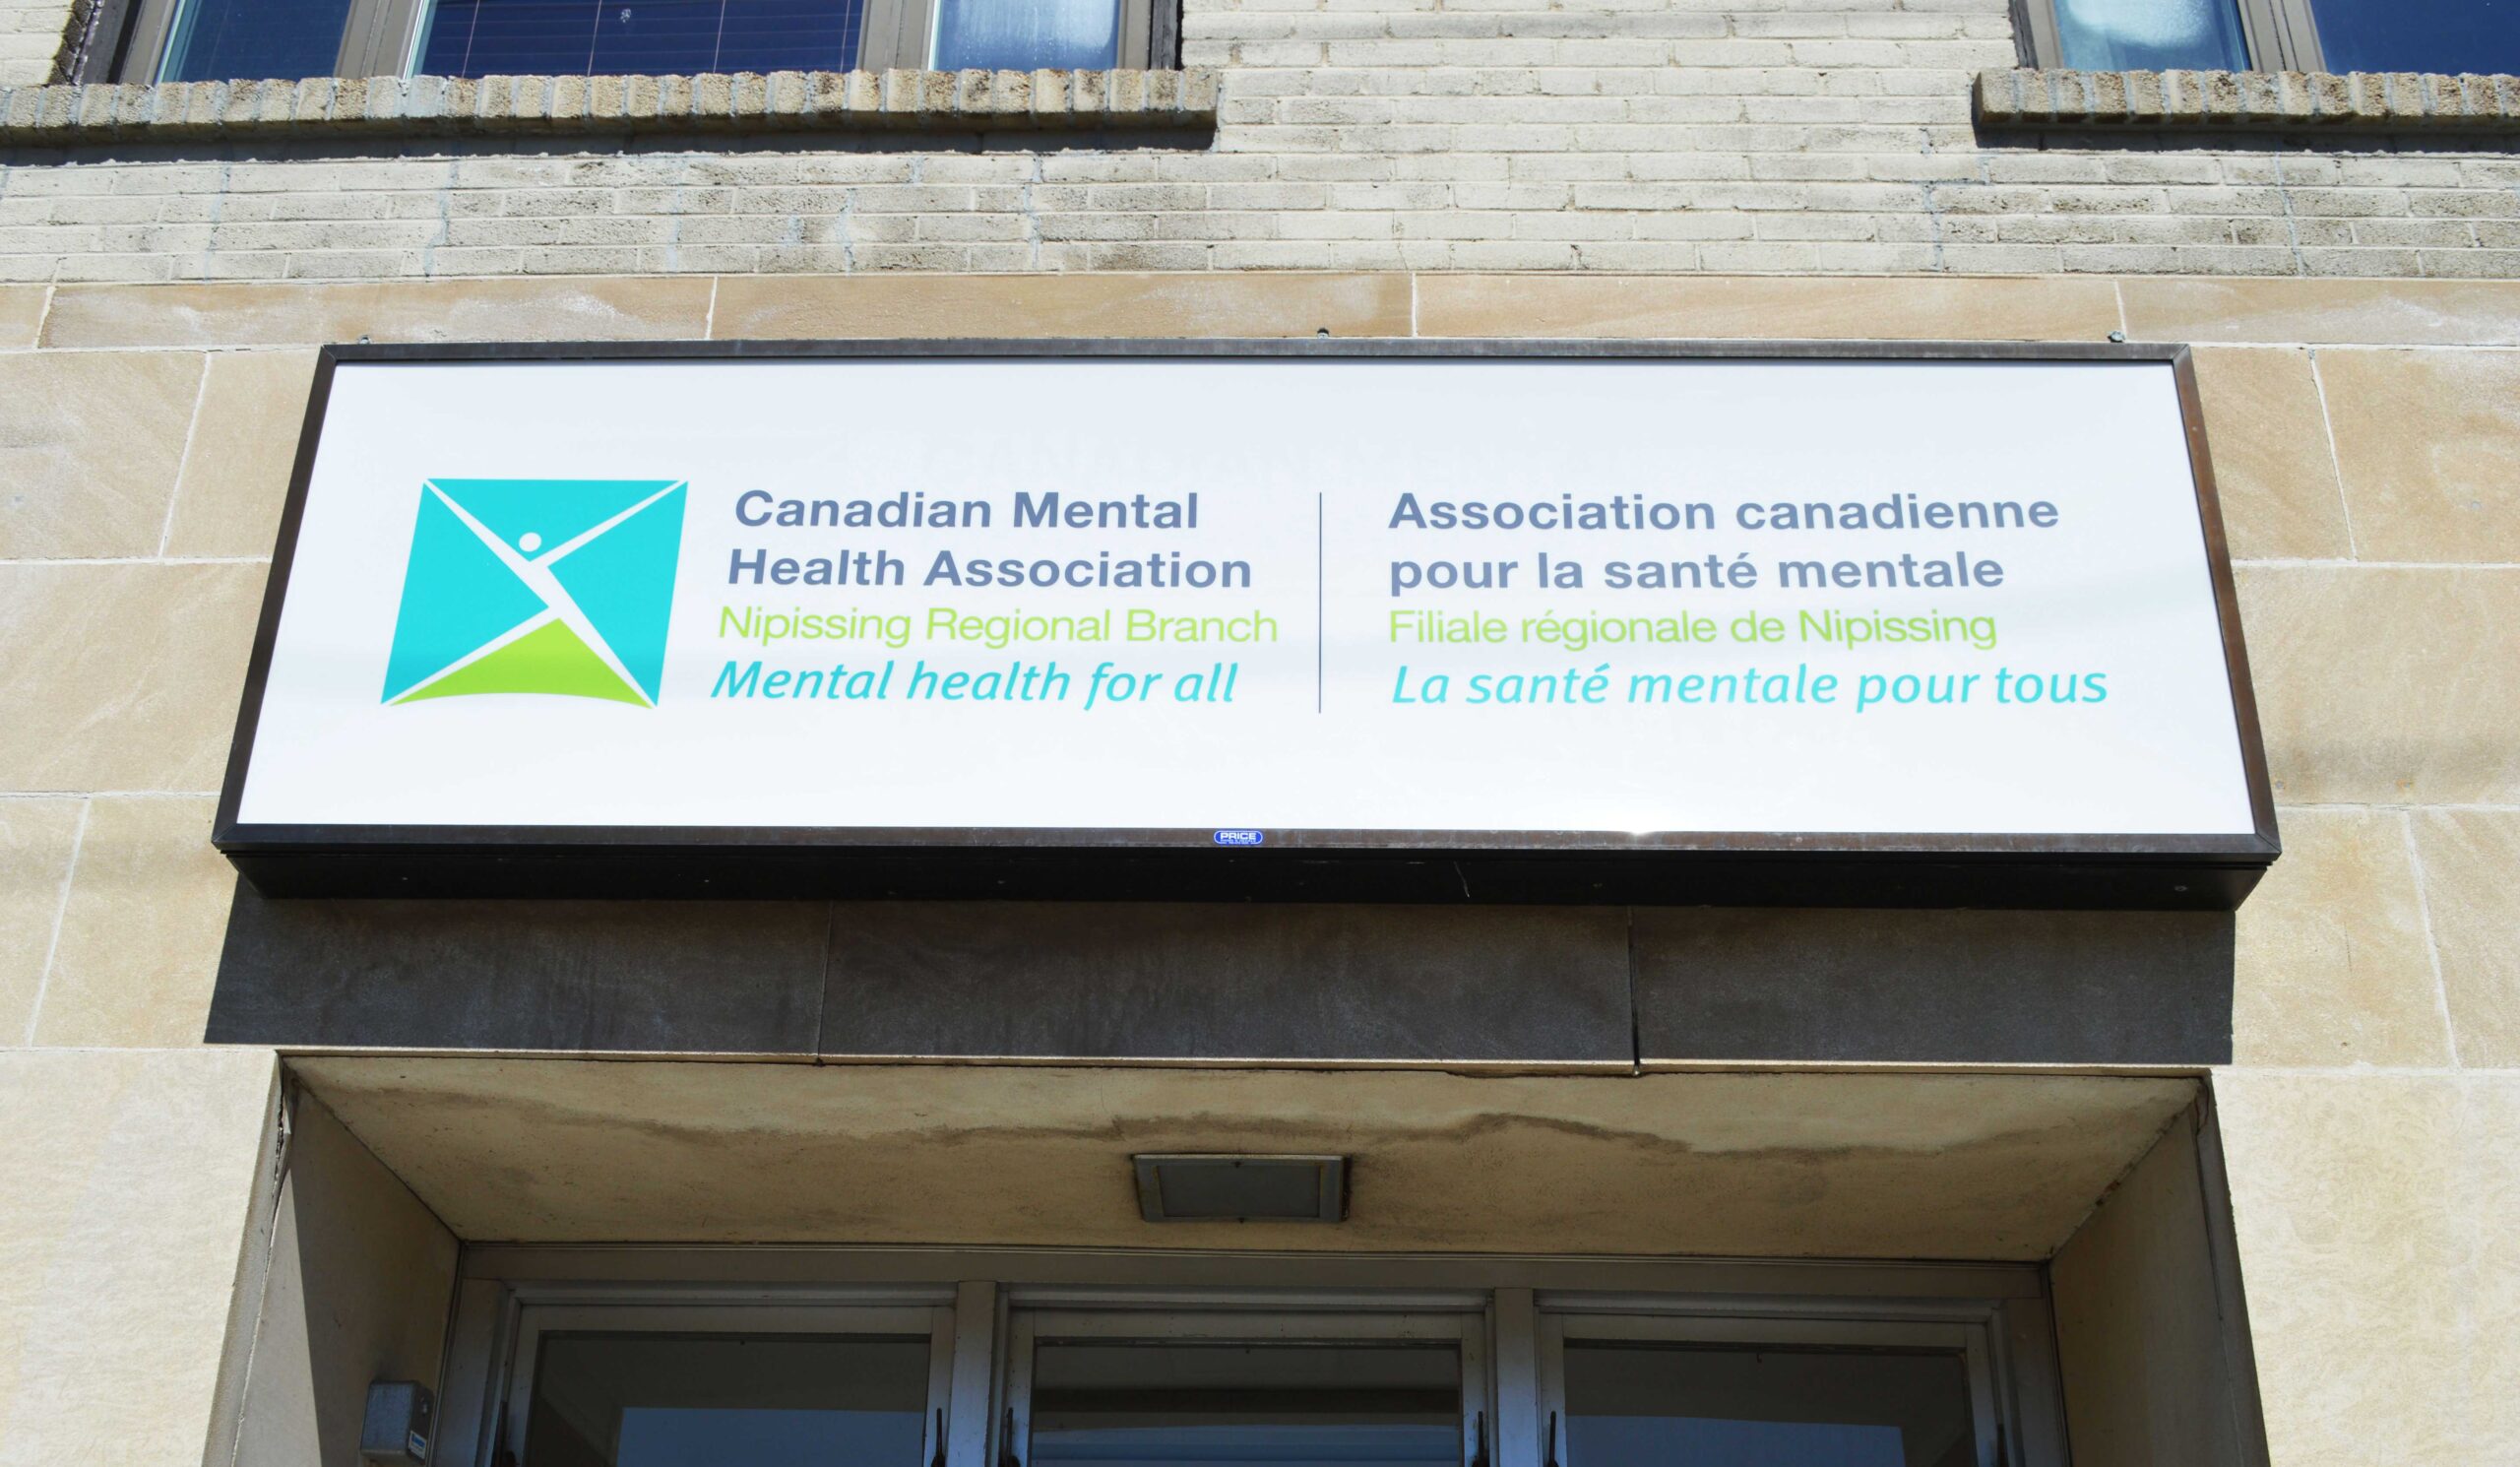 Canadian Mental Health Association - Fascia Sign